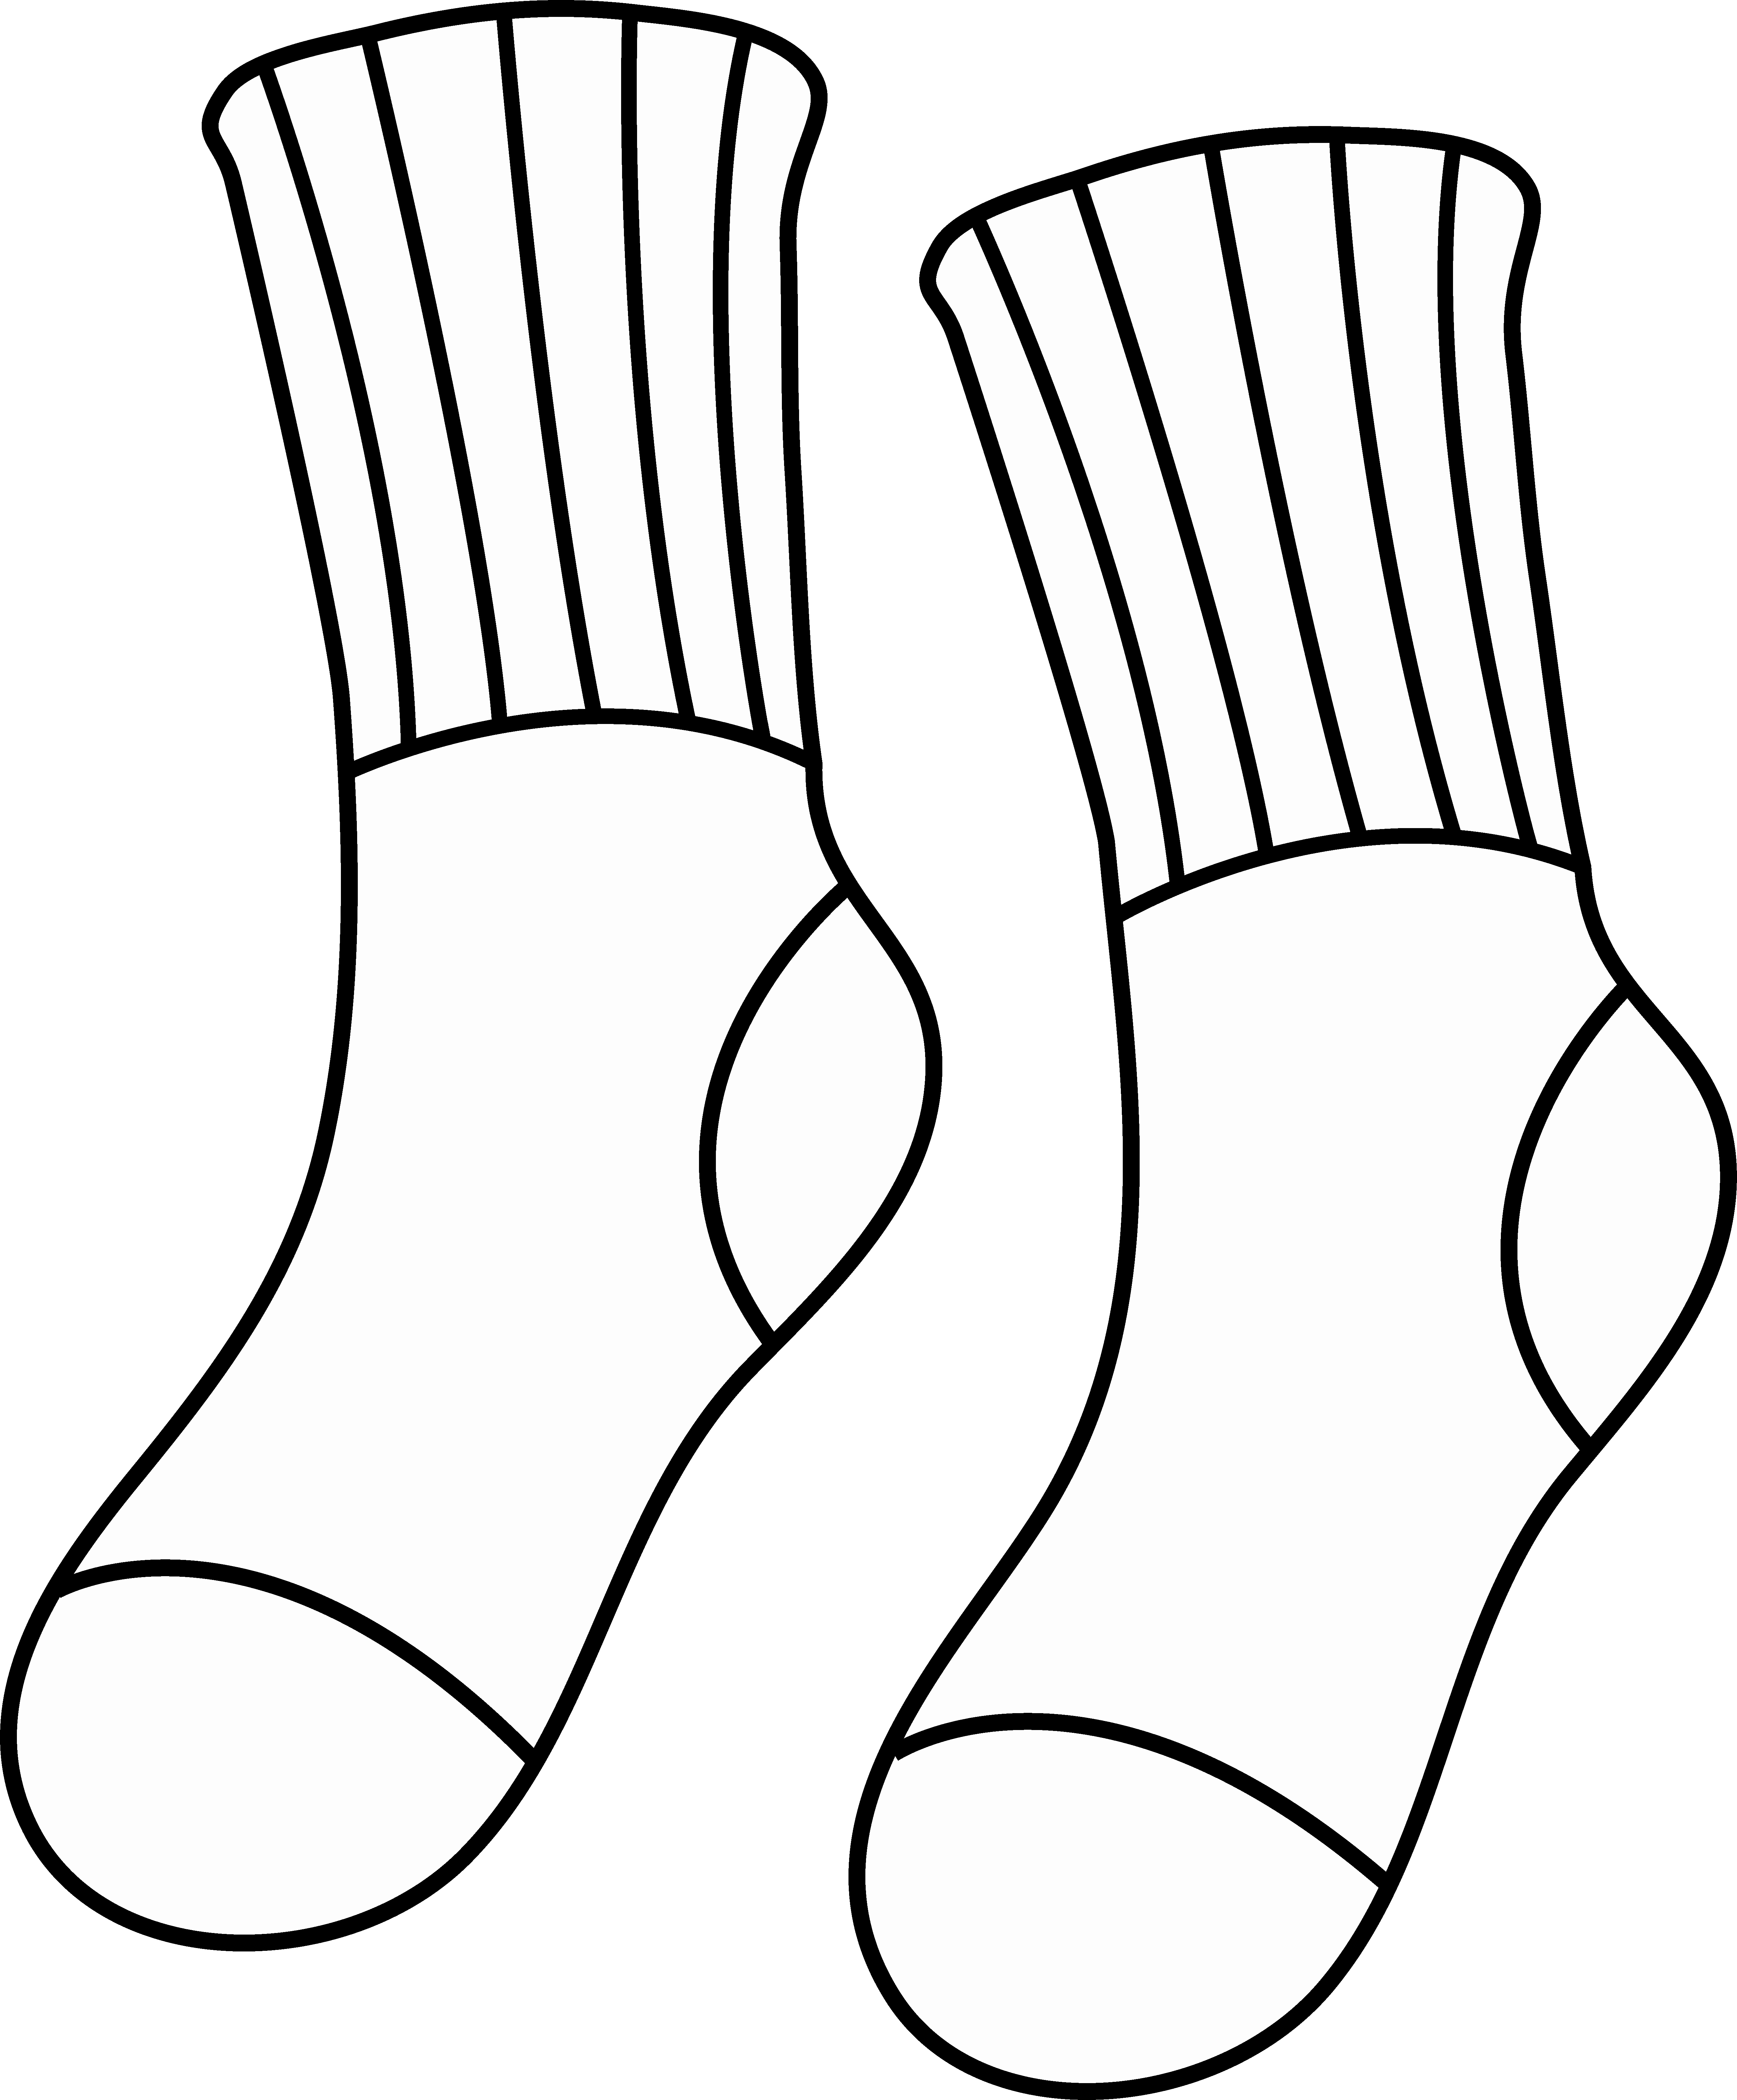 Fox in socks coloring page Fresh Socks Drawing